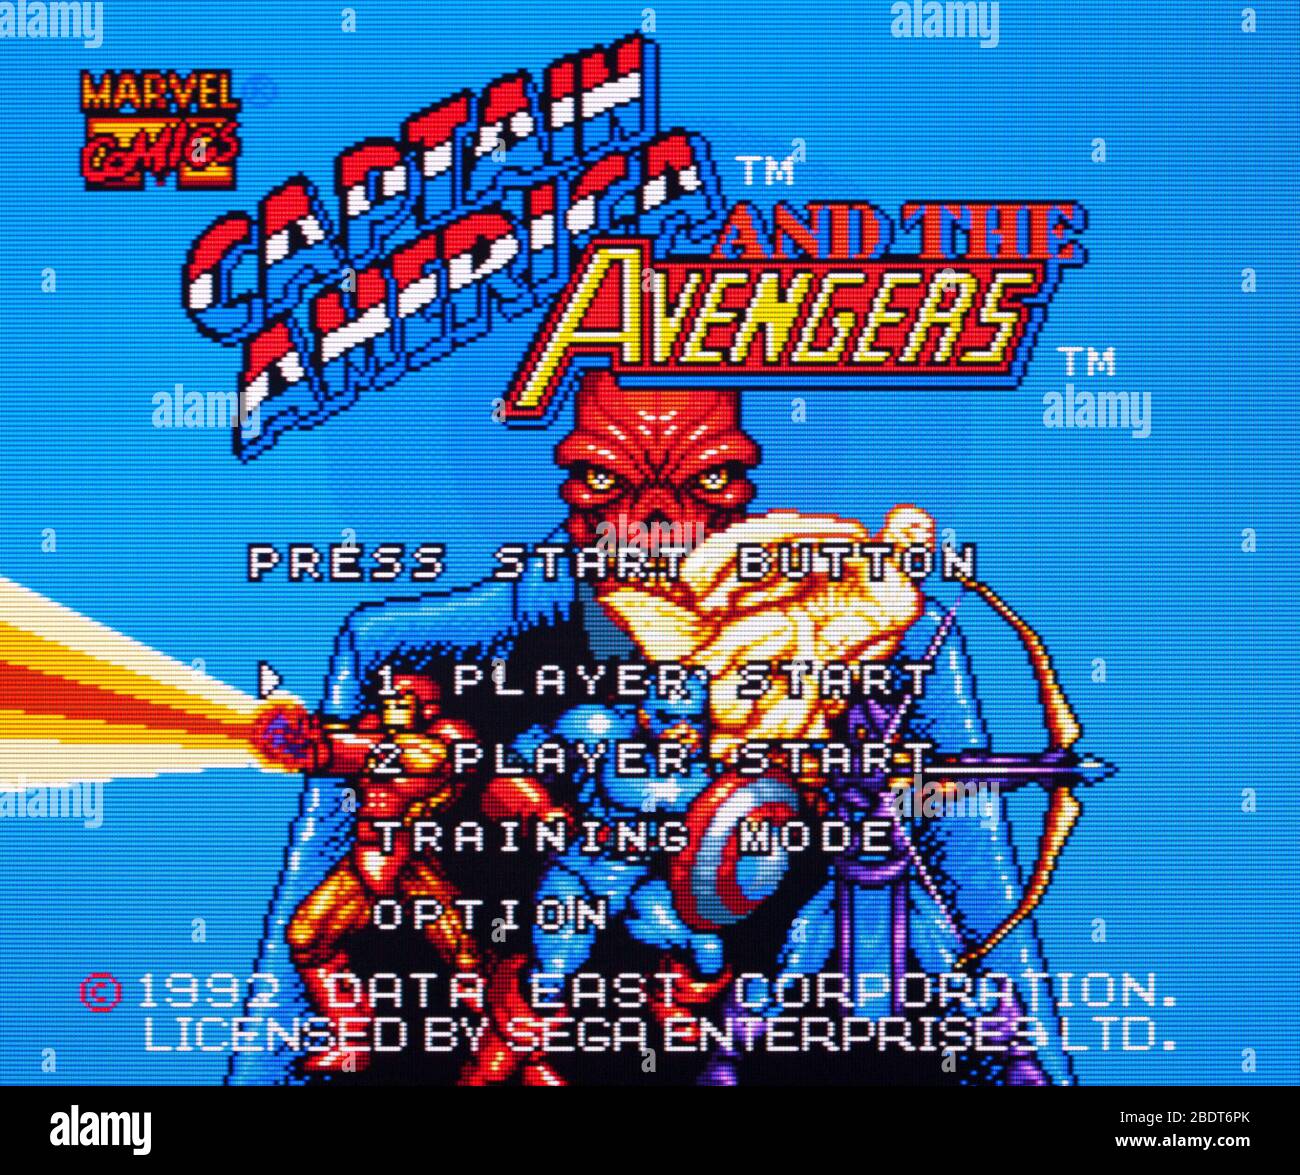 captain america and the avengers sega genesis